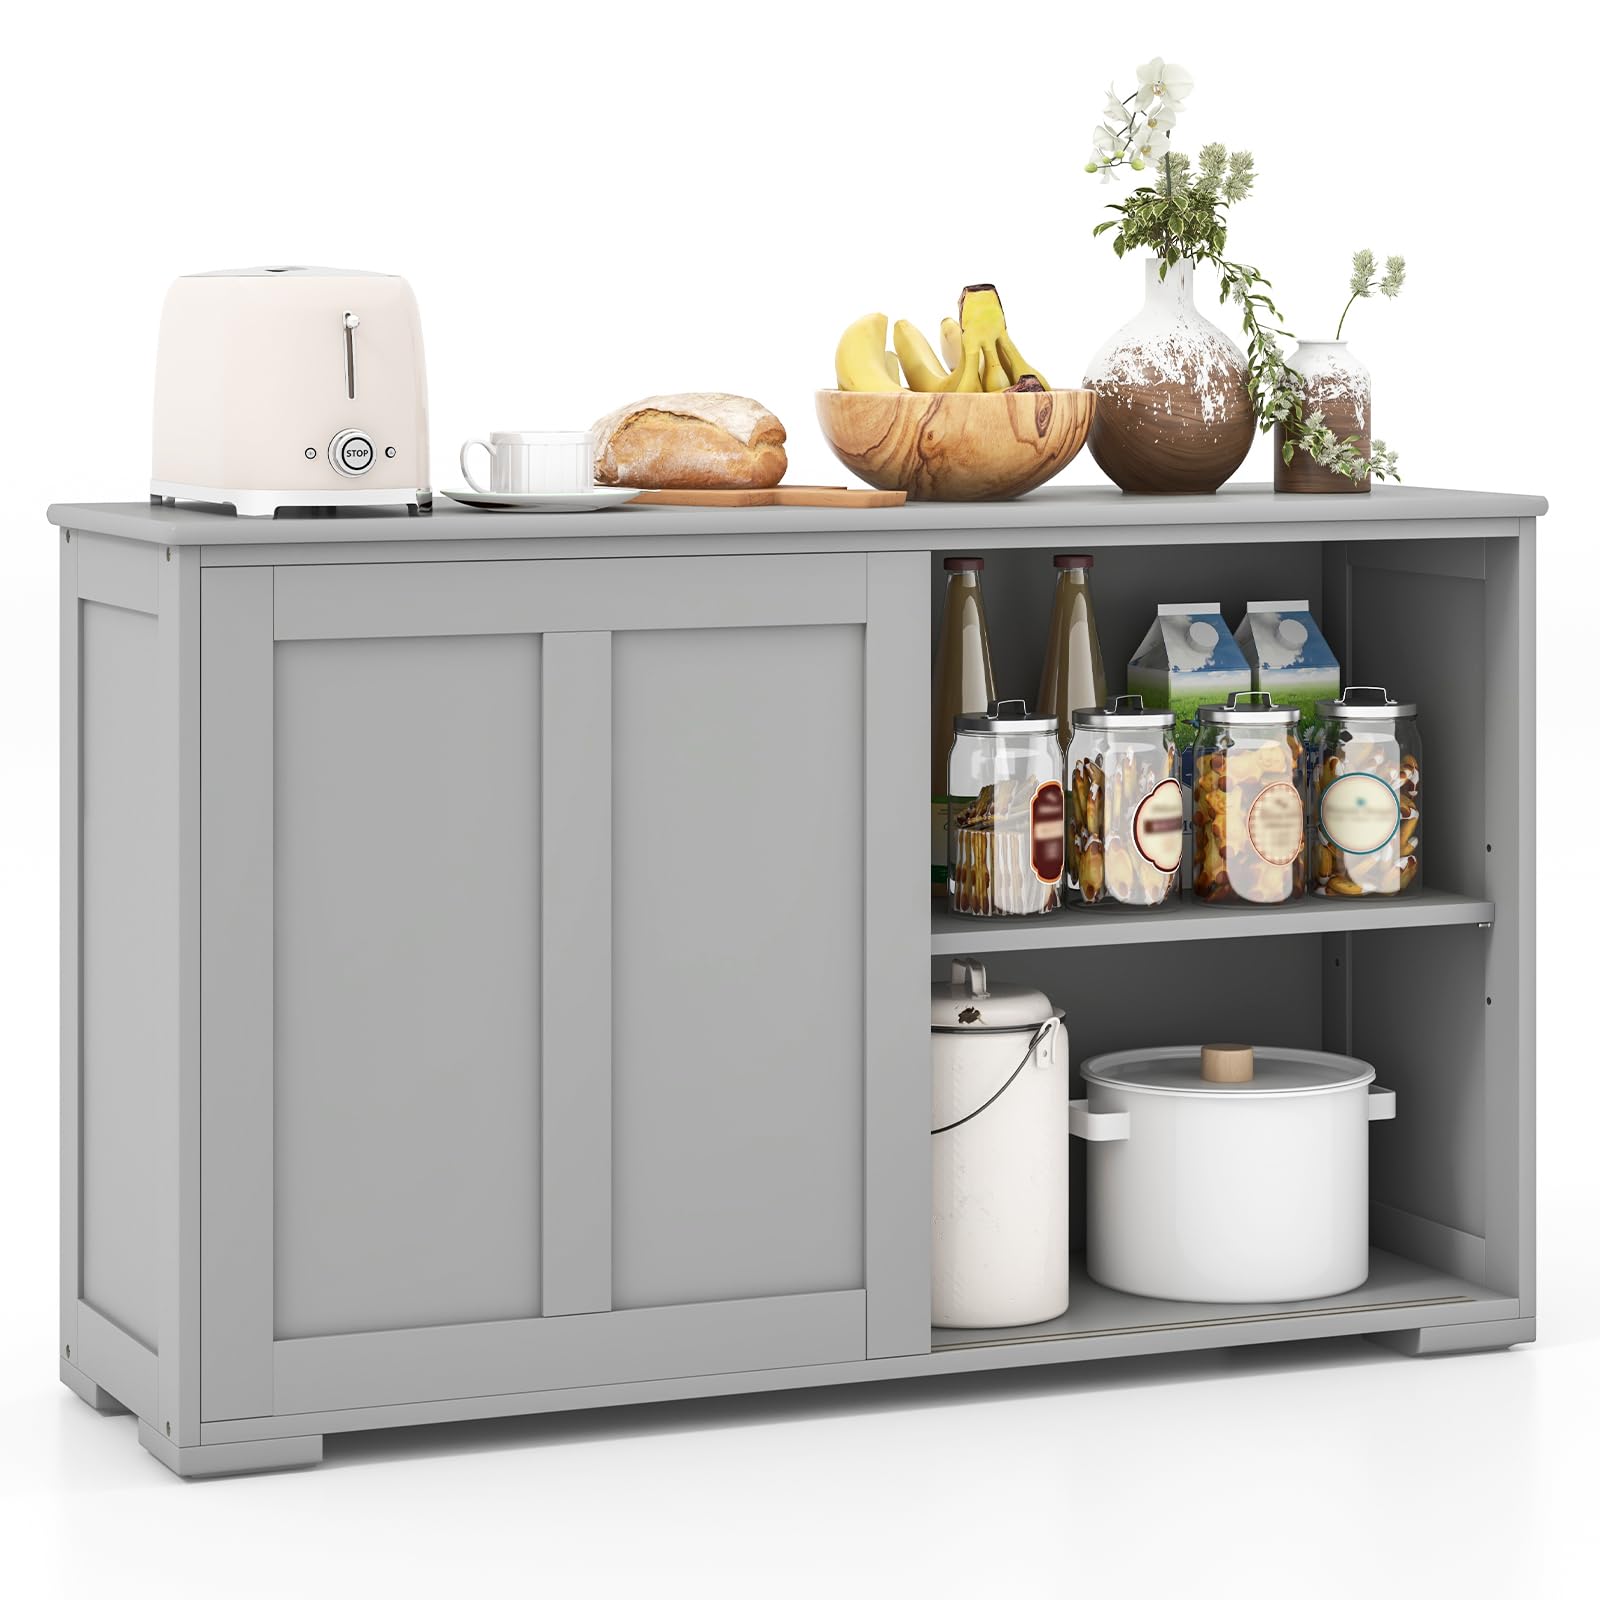 Giantex Buffet Cabinet with Storage, Coffee Bar Wine Cabinet, Farmhouse Sideboard w/Sliding Door